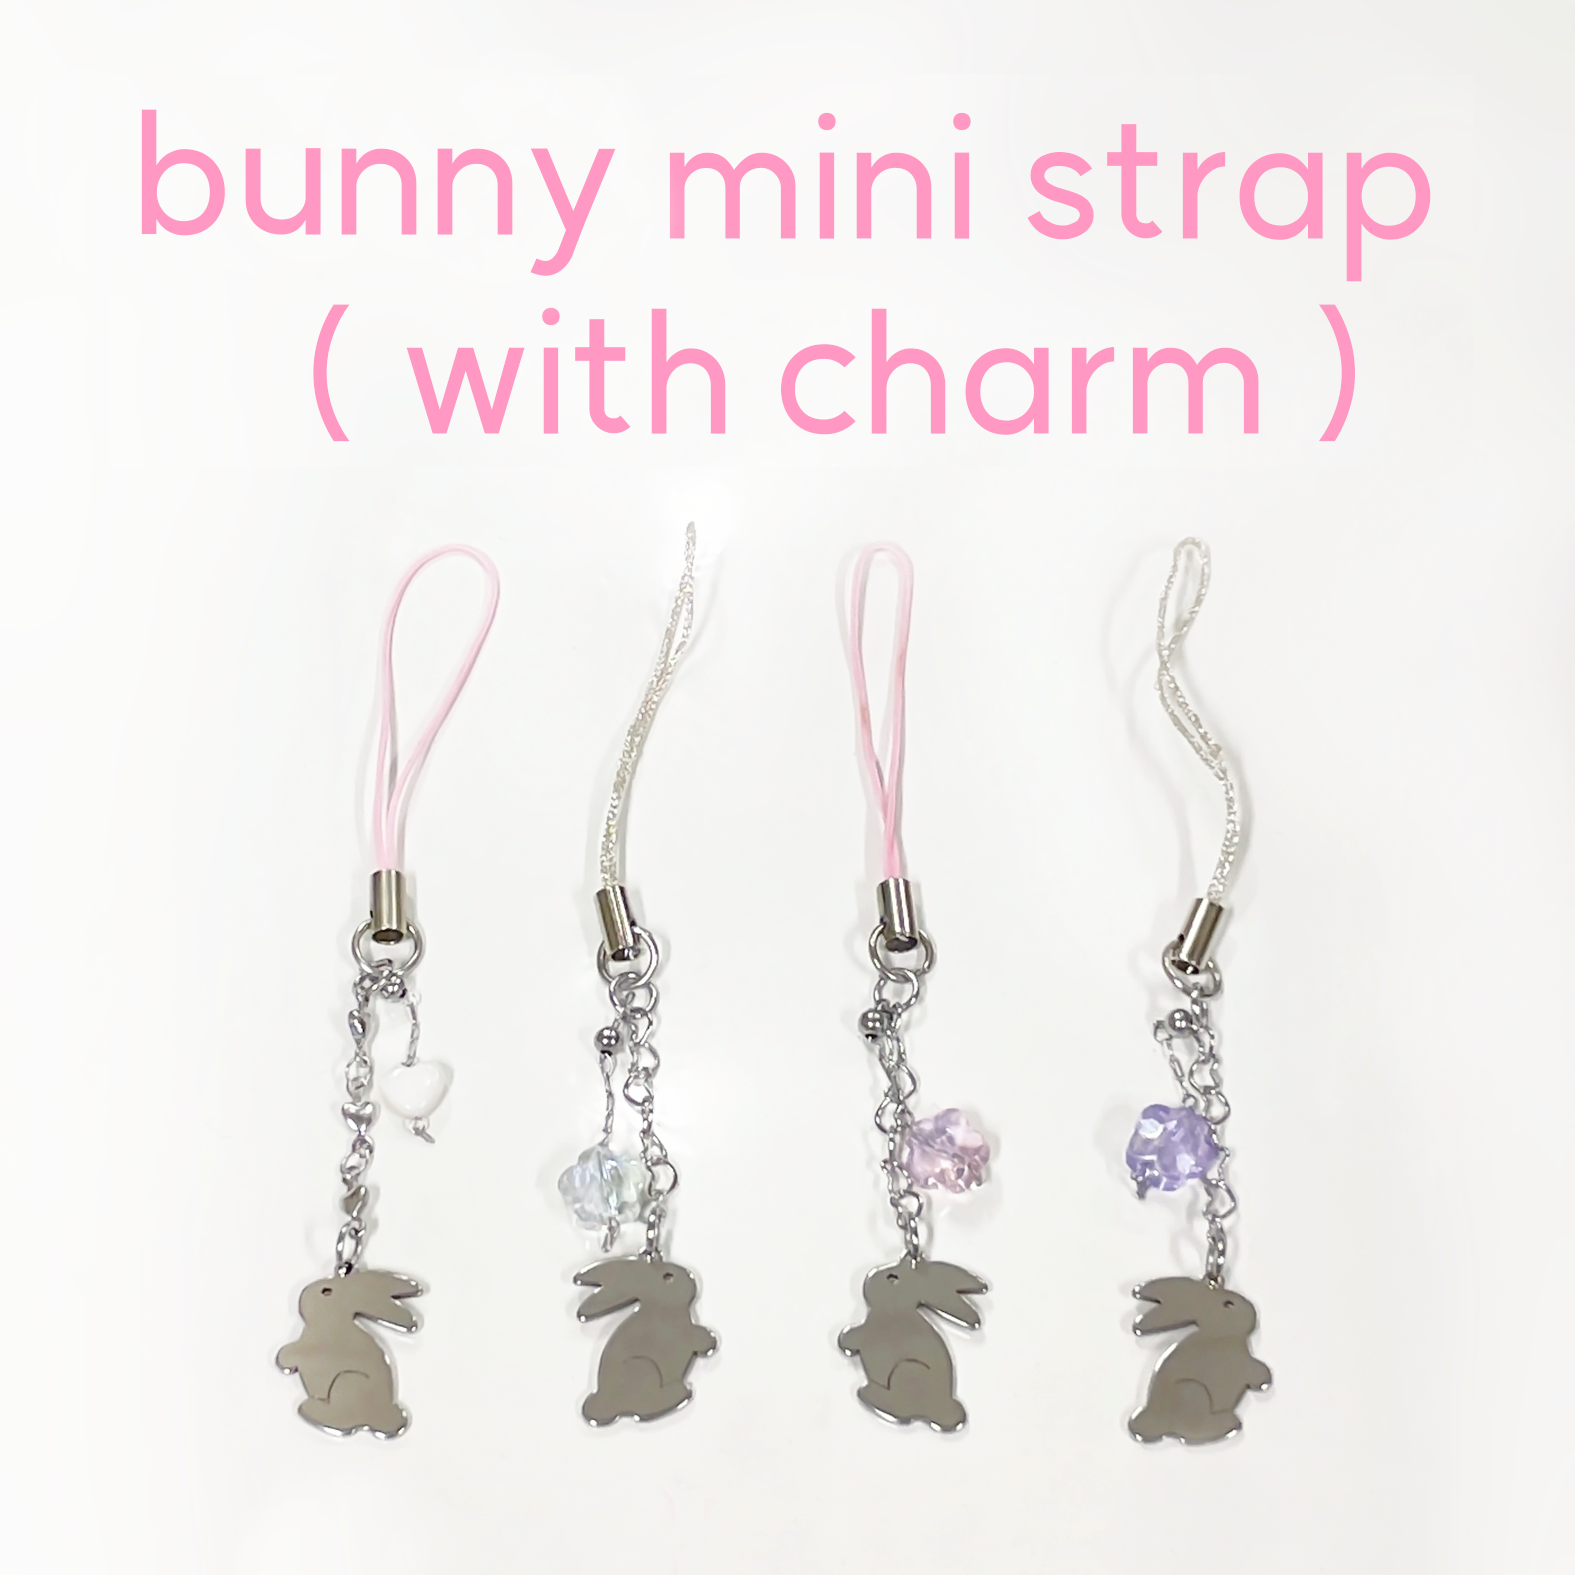 bunny mini strap ( with charm )